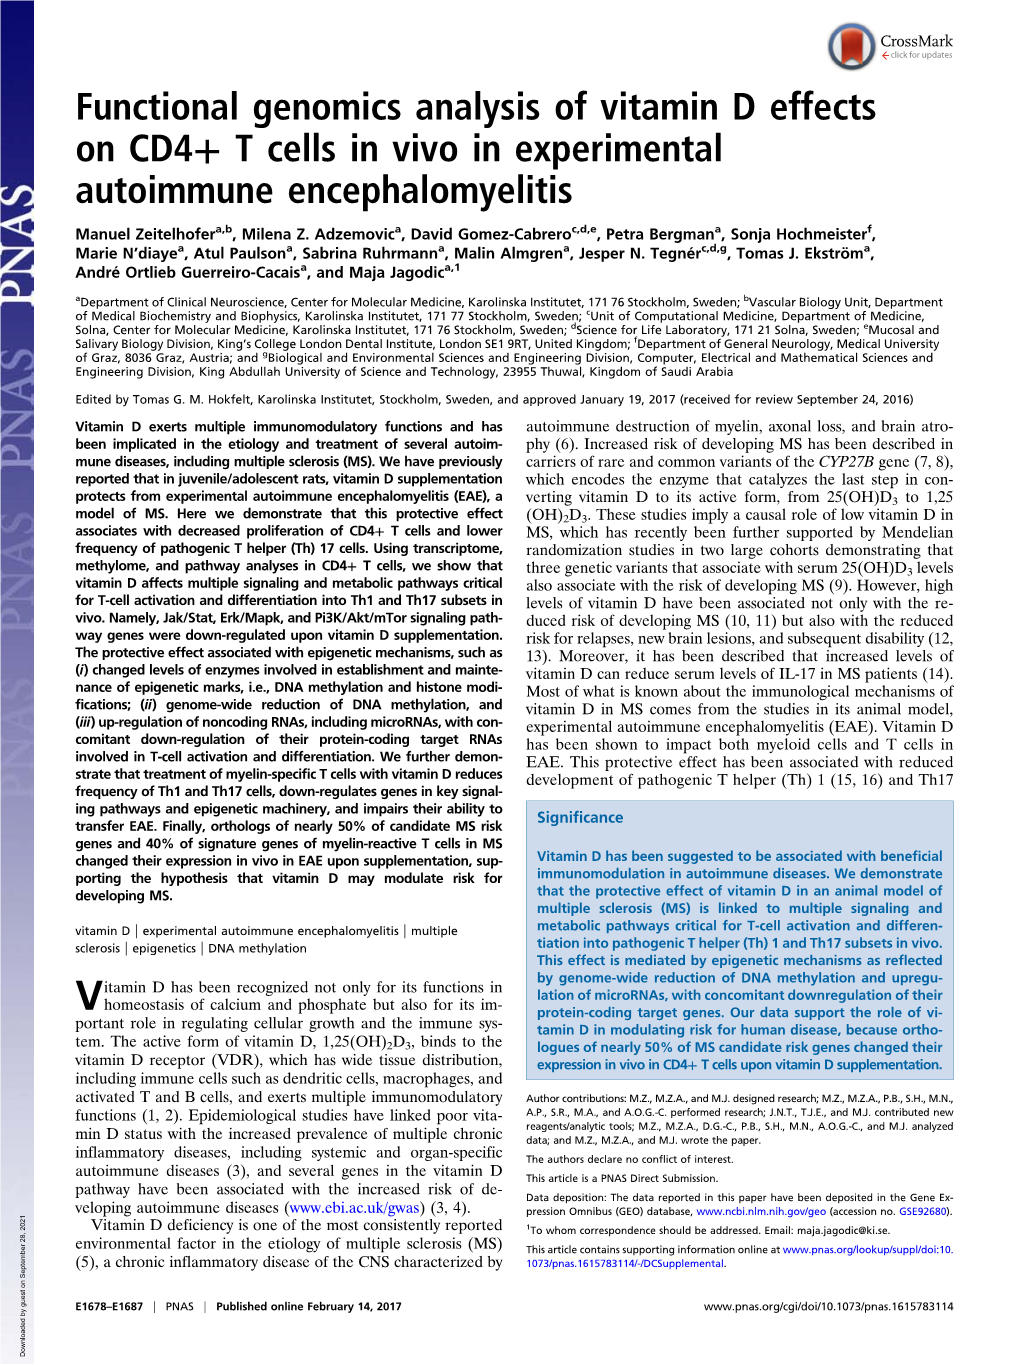 Functional Genomics Analysis of Vitamin D Effects on CD4+ T Cells in Vivo in Experimental Autoimmune Encephalomyelitis